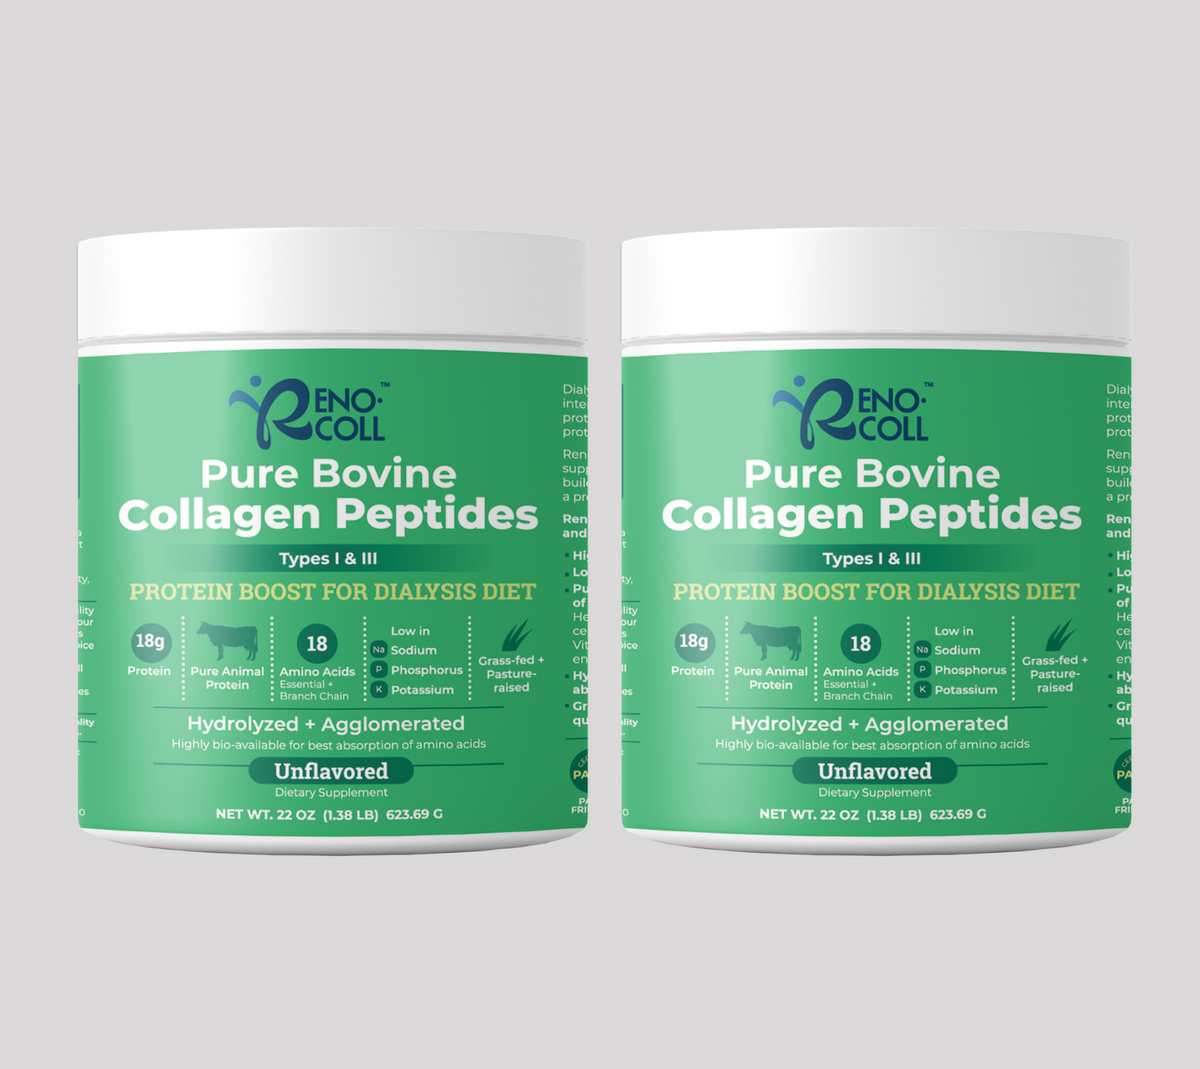 Reno-Coll® Pure Bovine Collagen Peptides for Kidney Dialysis Diet, 22 oz.